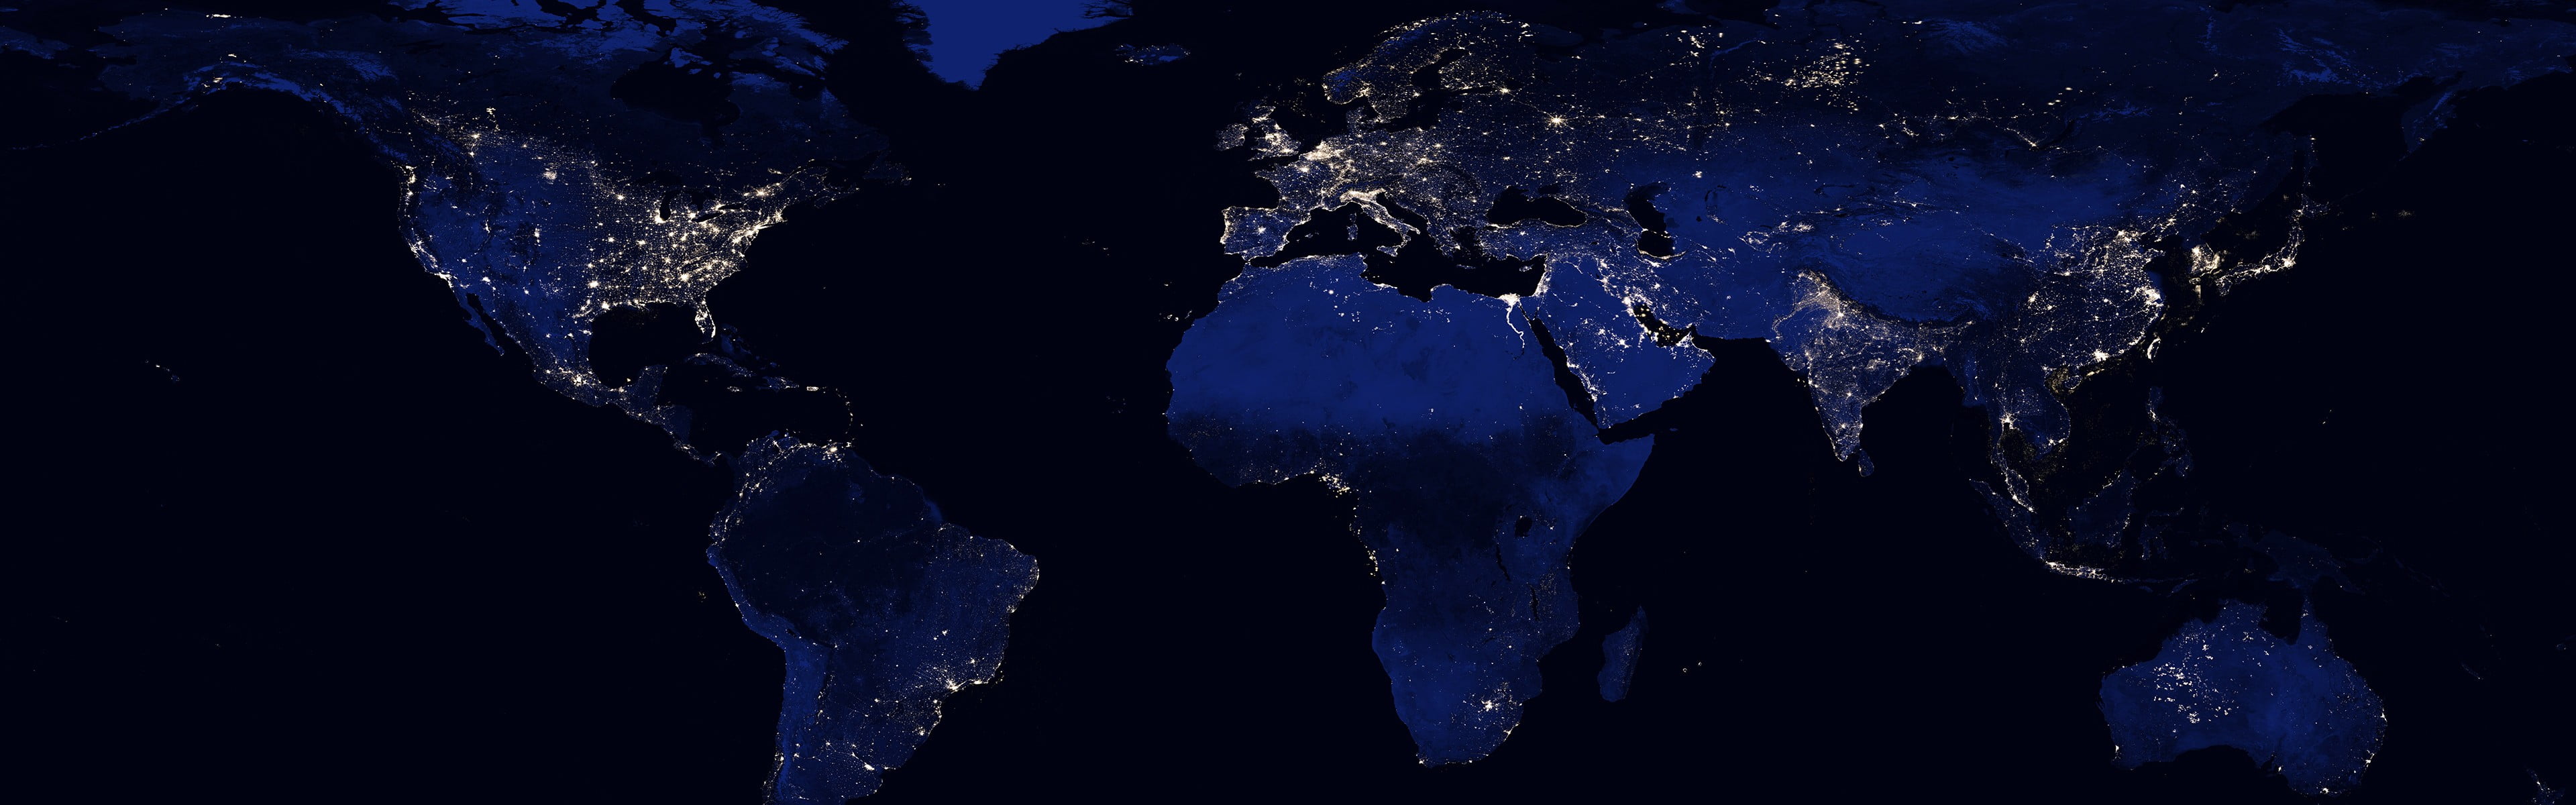 Free Download | Hd Wallpaper: World Map Digital Wallpaper, Earth, Night